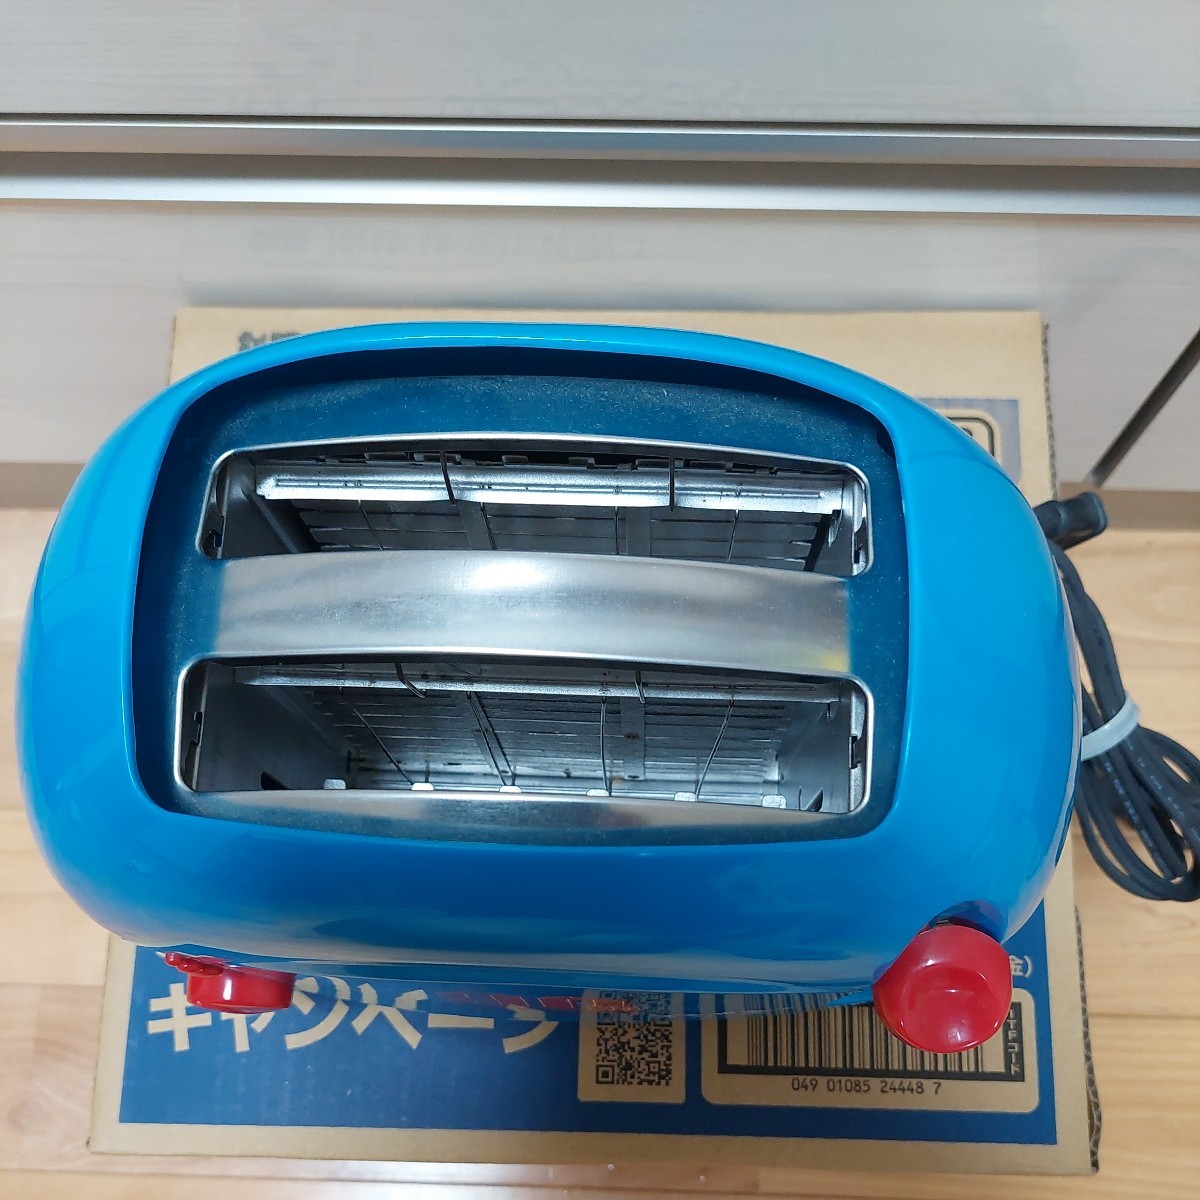 lipobi язык Dfaito90th память акция товар электрический тостер pop up тостер 